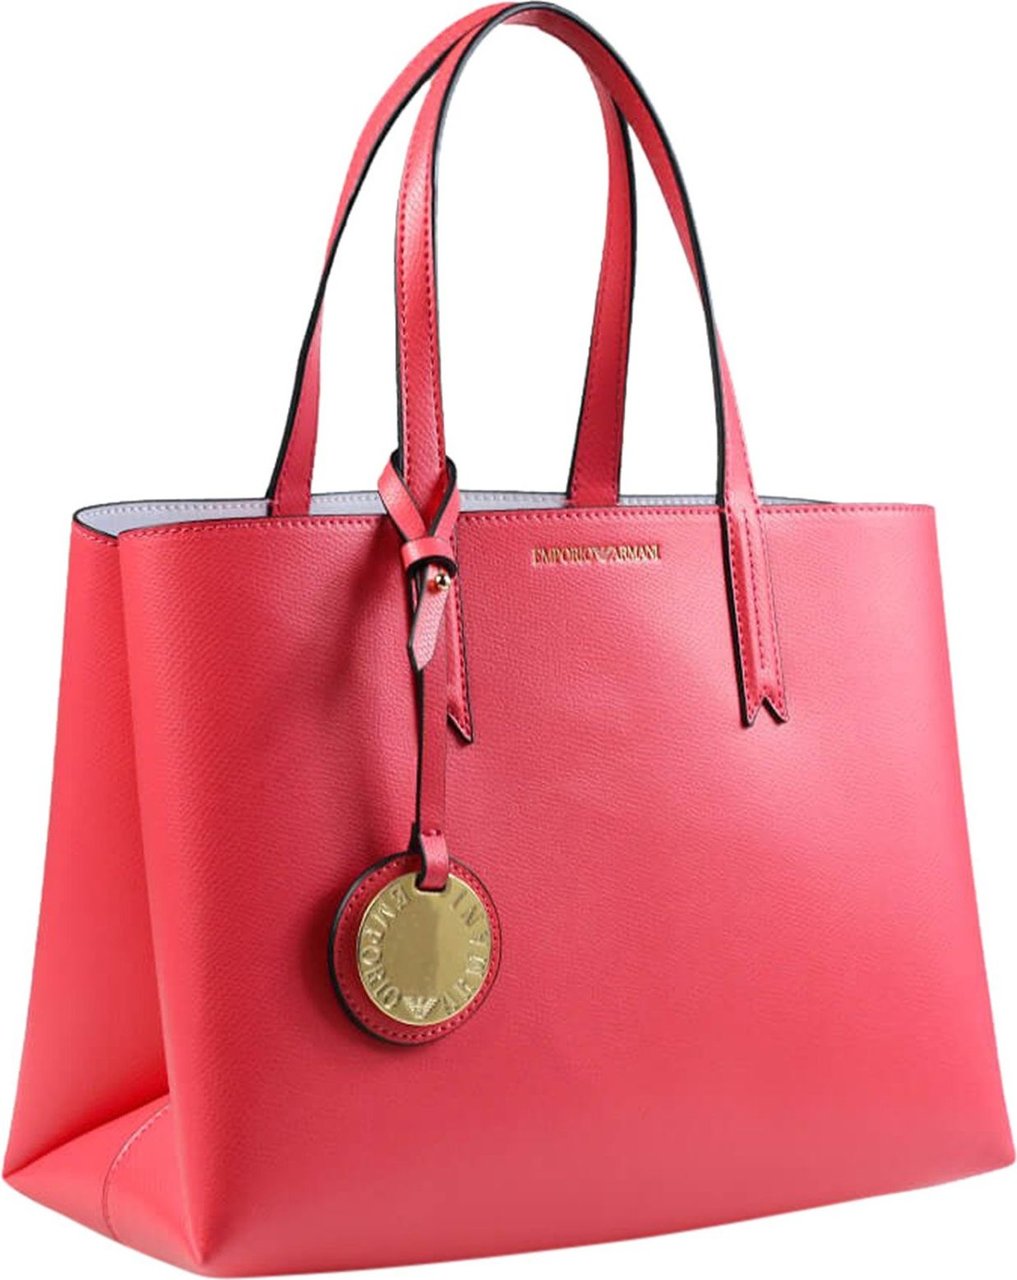 Emporio Armani Coral Faux Leather Handbag Pink Roze